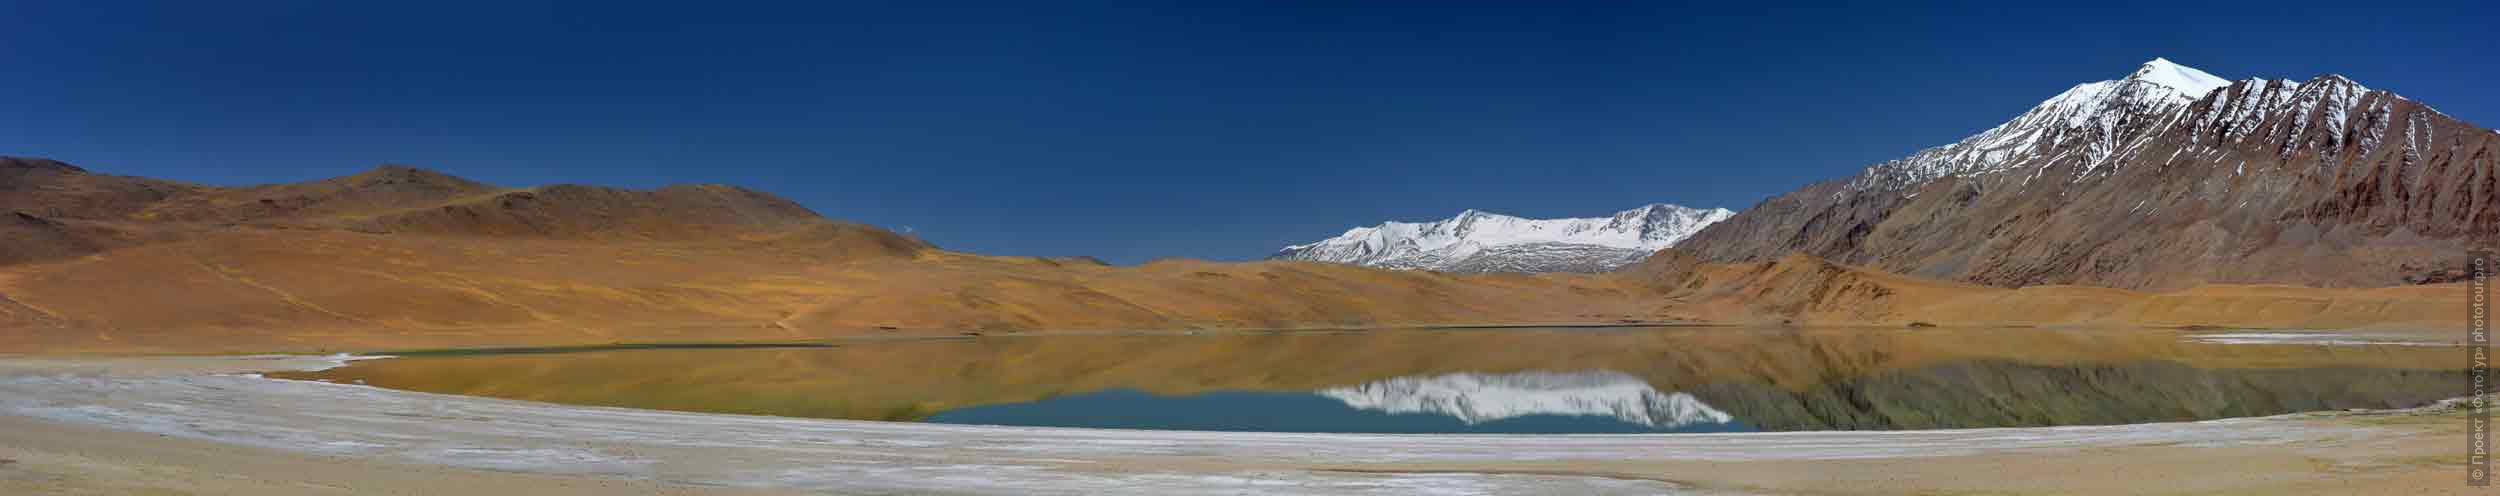 Lake Kagyar Tso, Ladakh women’s tour, August 31 - September 14, 2019.